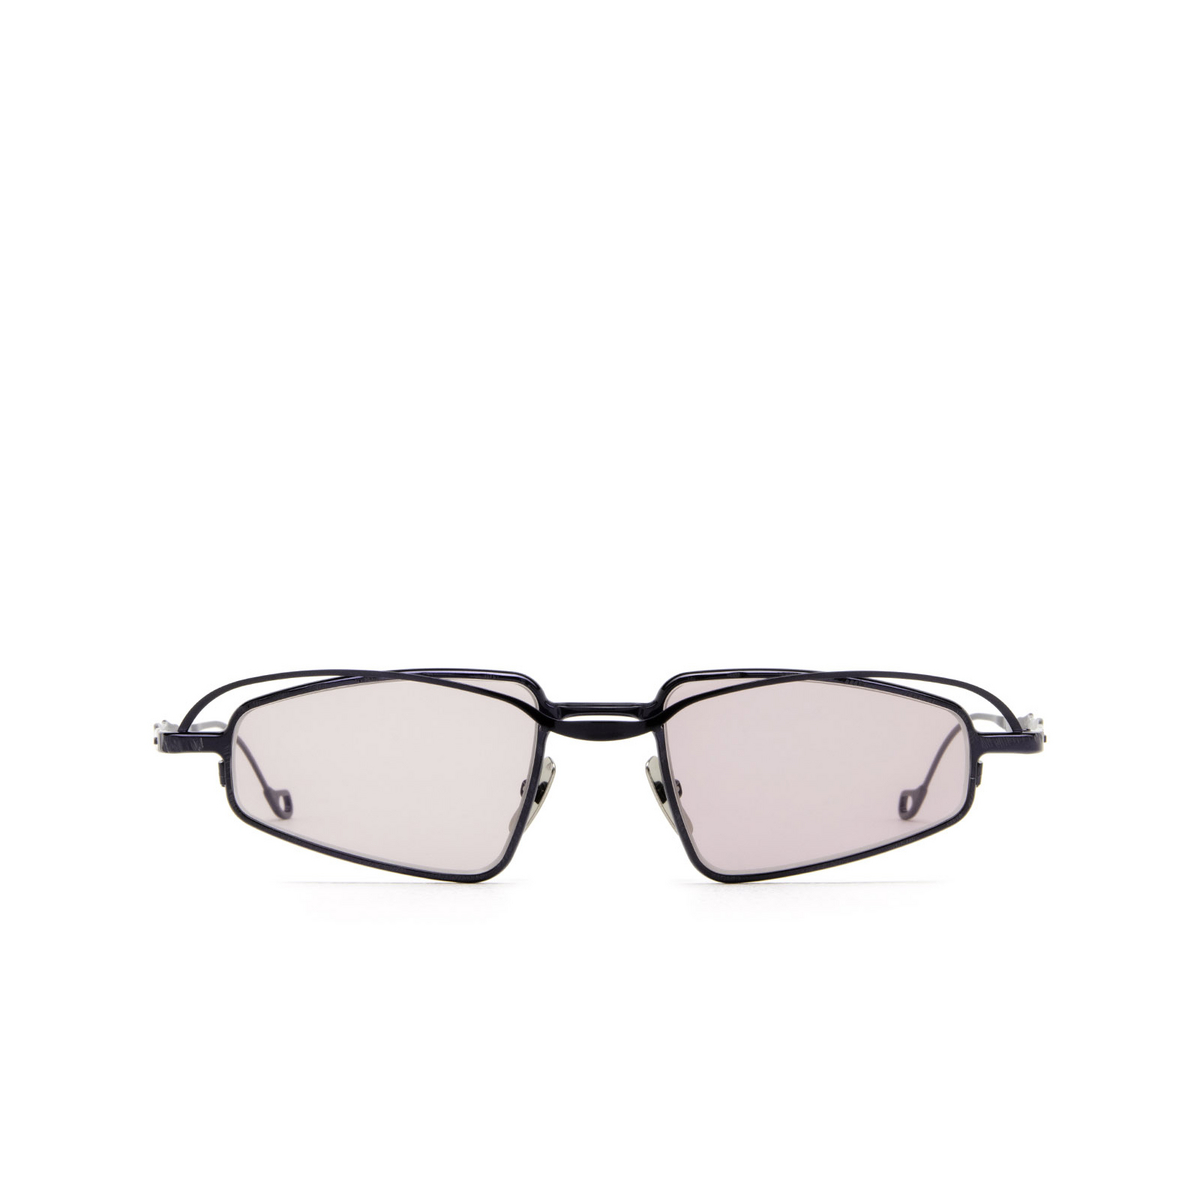 Kuboraum® Irregular Sunglasses: H73 color Bl Metallic Blue - front view